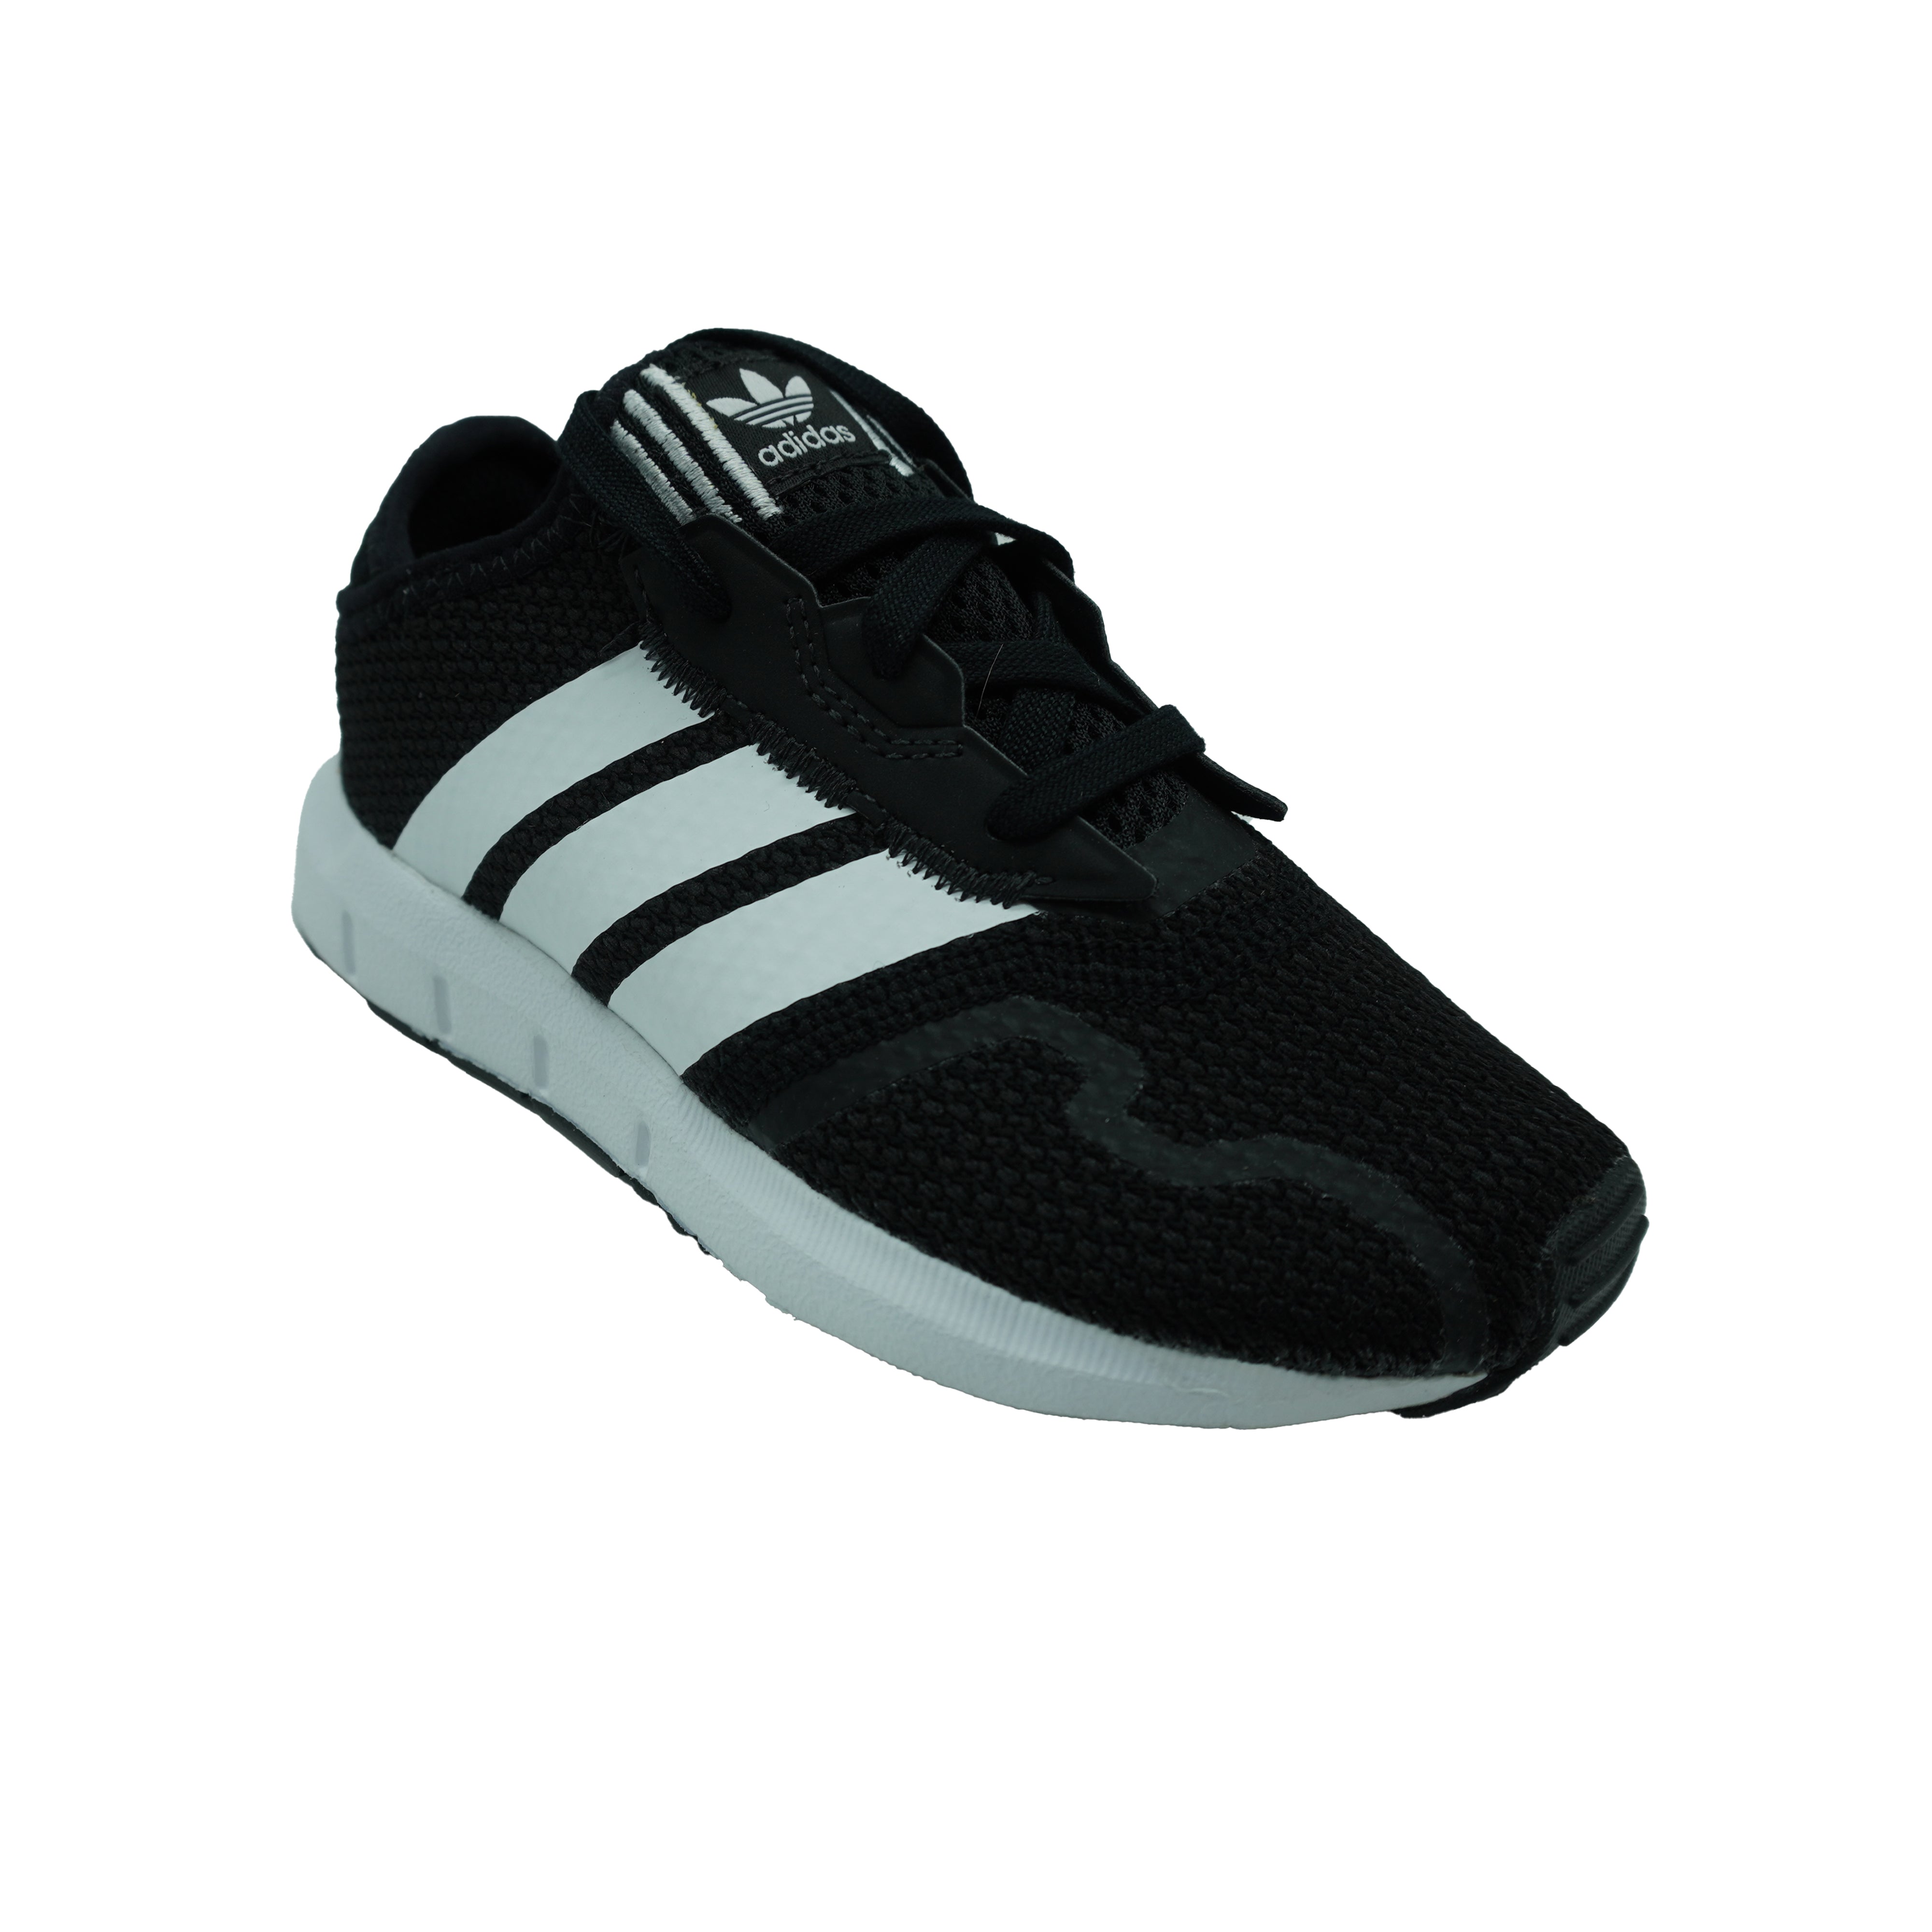 Adidas Toddler Boy's Swift Run X I Athletic Shoes Black White 10 Uber Shop Retail Store